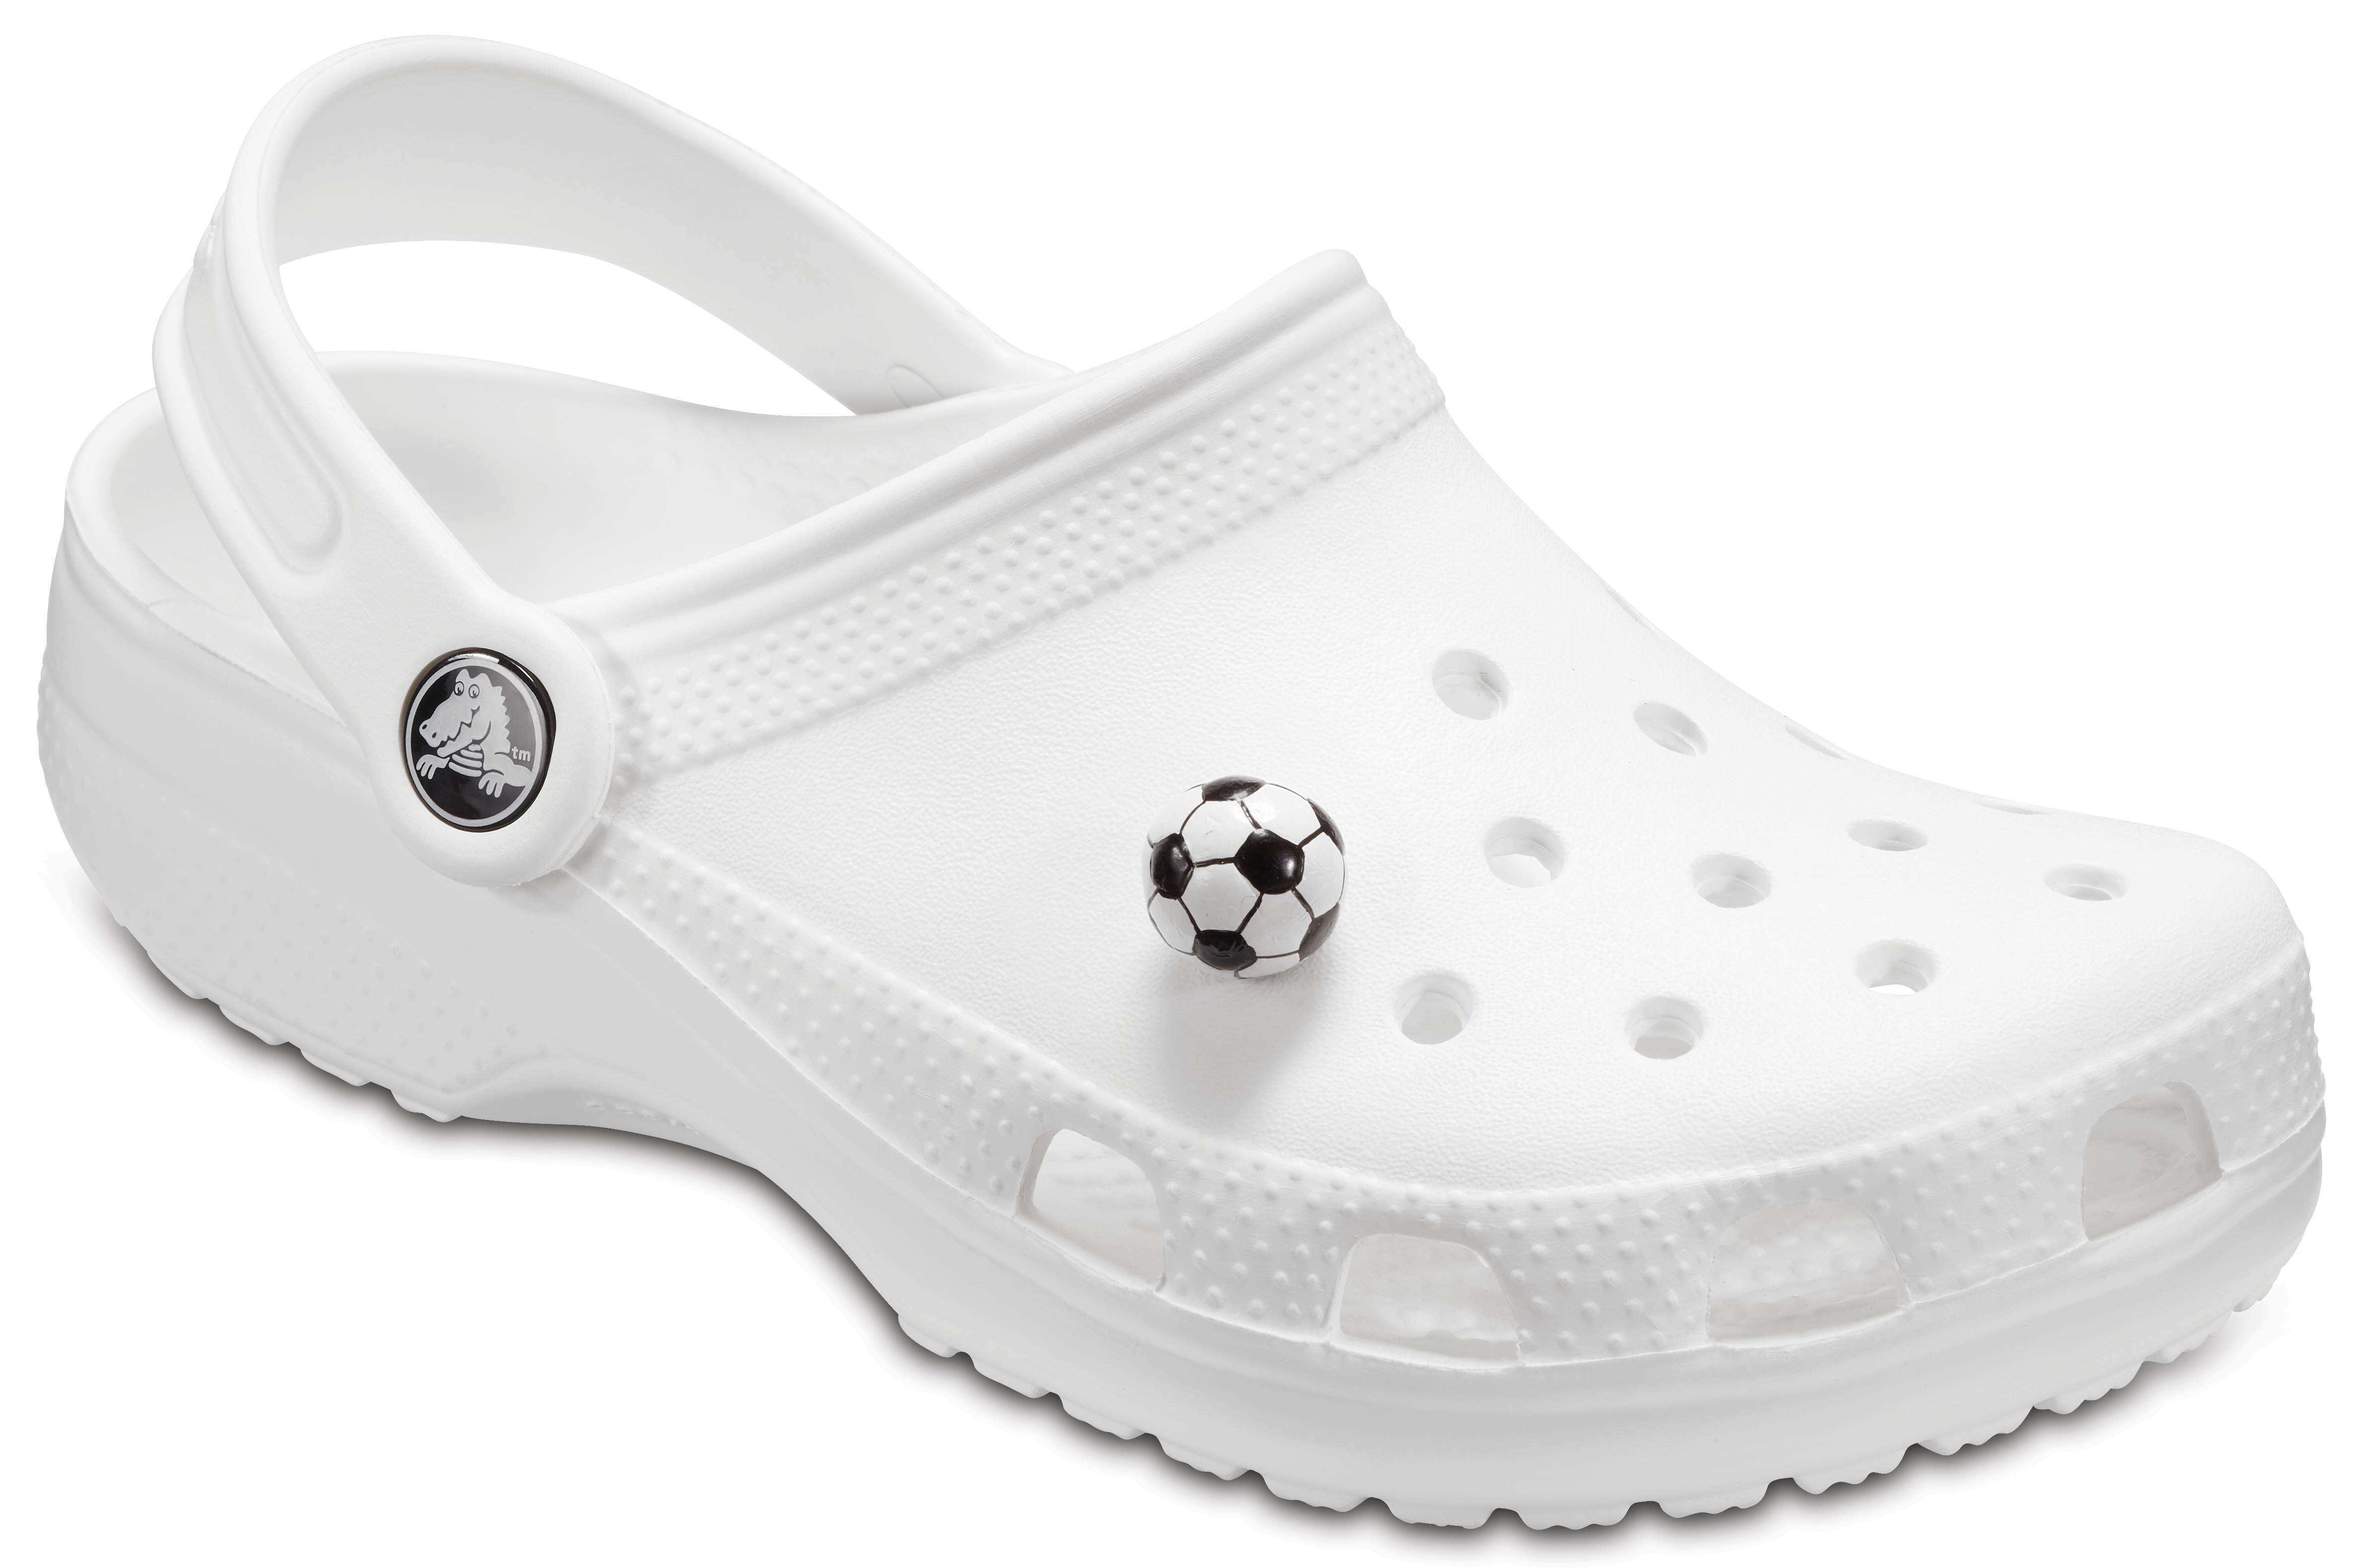 soccer ball croc charm